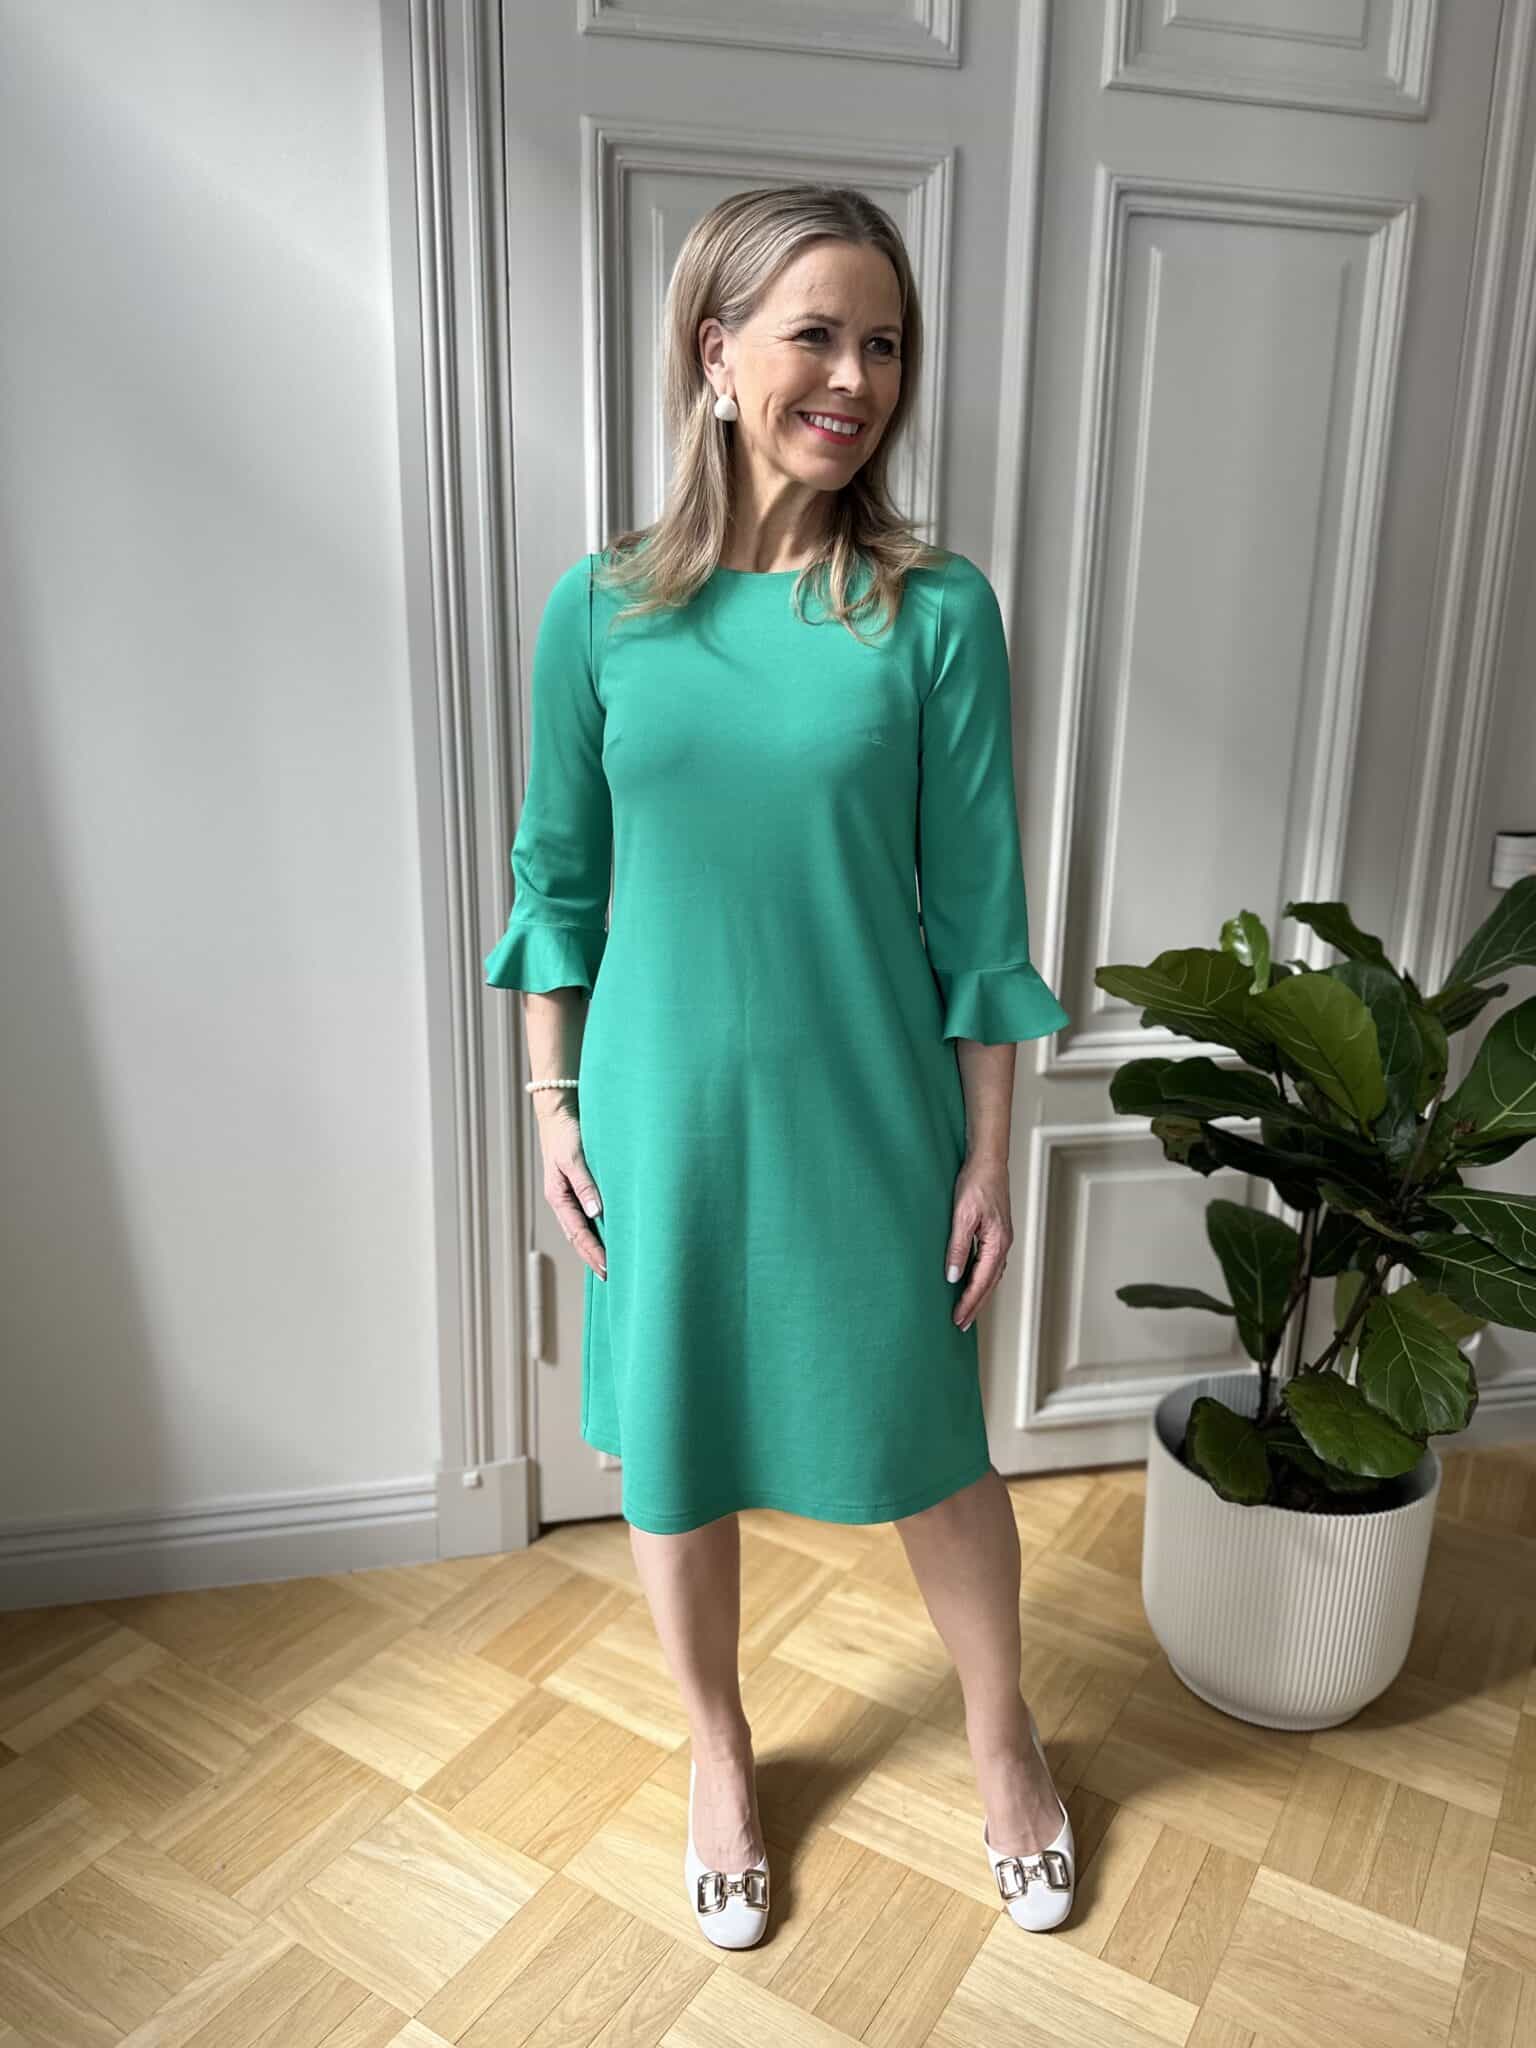 Doppwoman Violet mekon uusi väri on vihreä